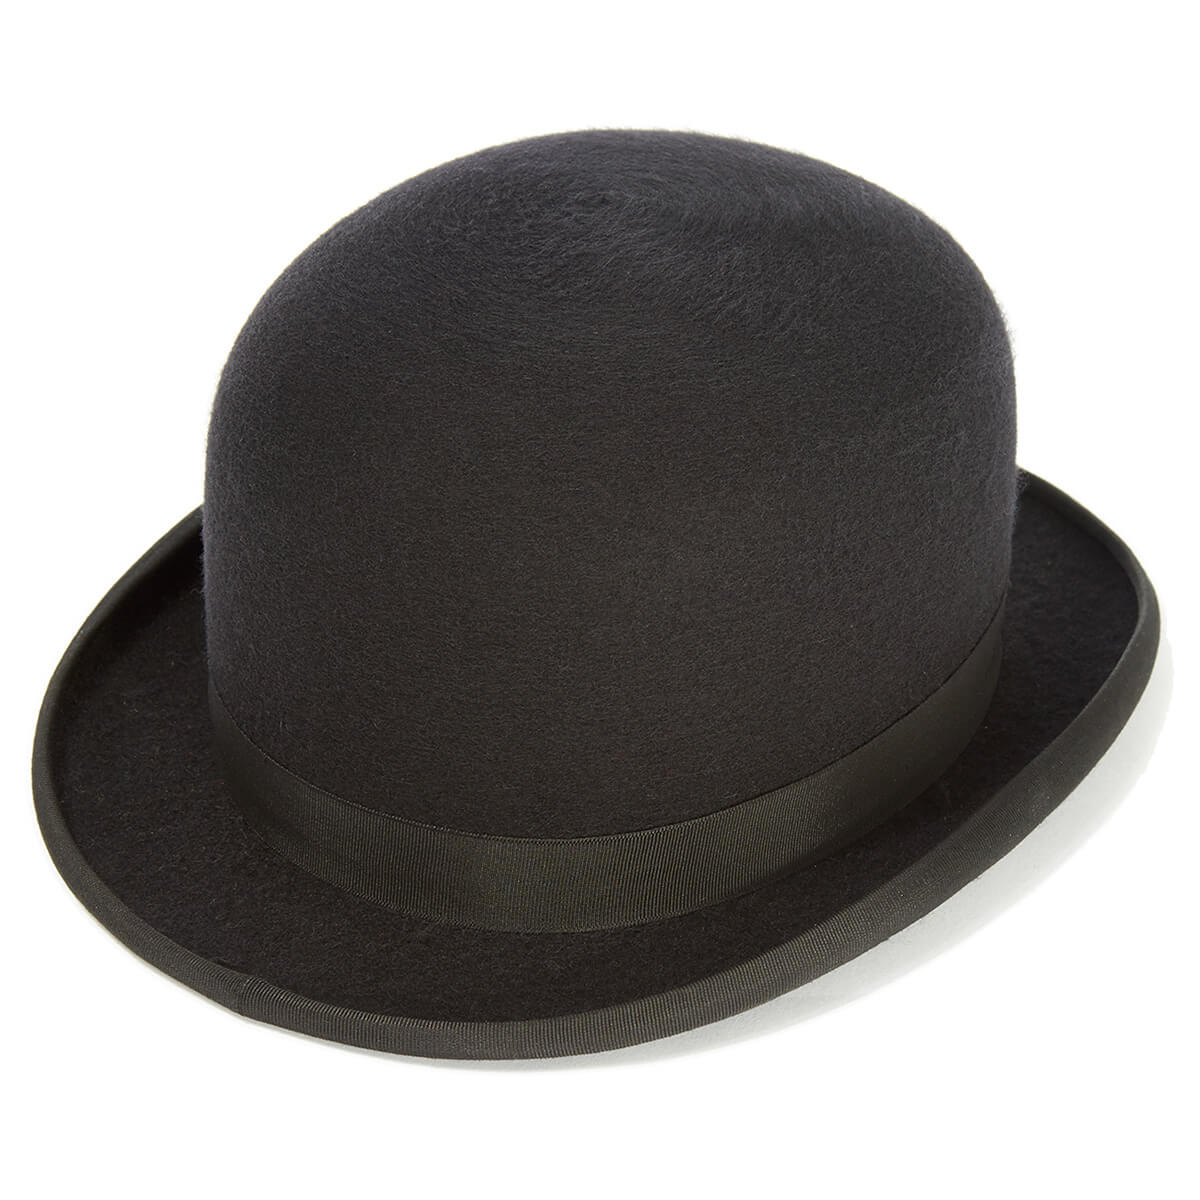 Wool Felt Bowler Hat